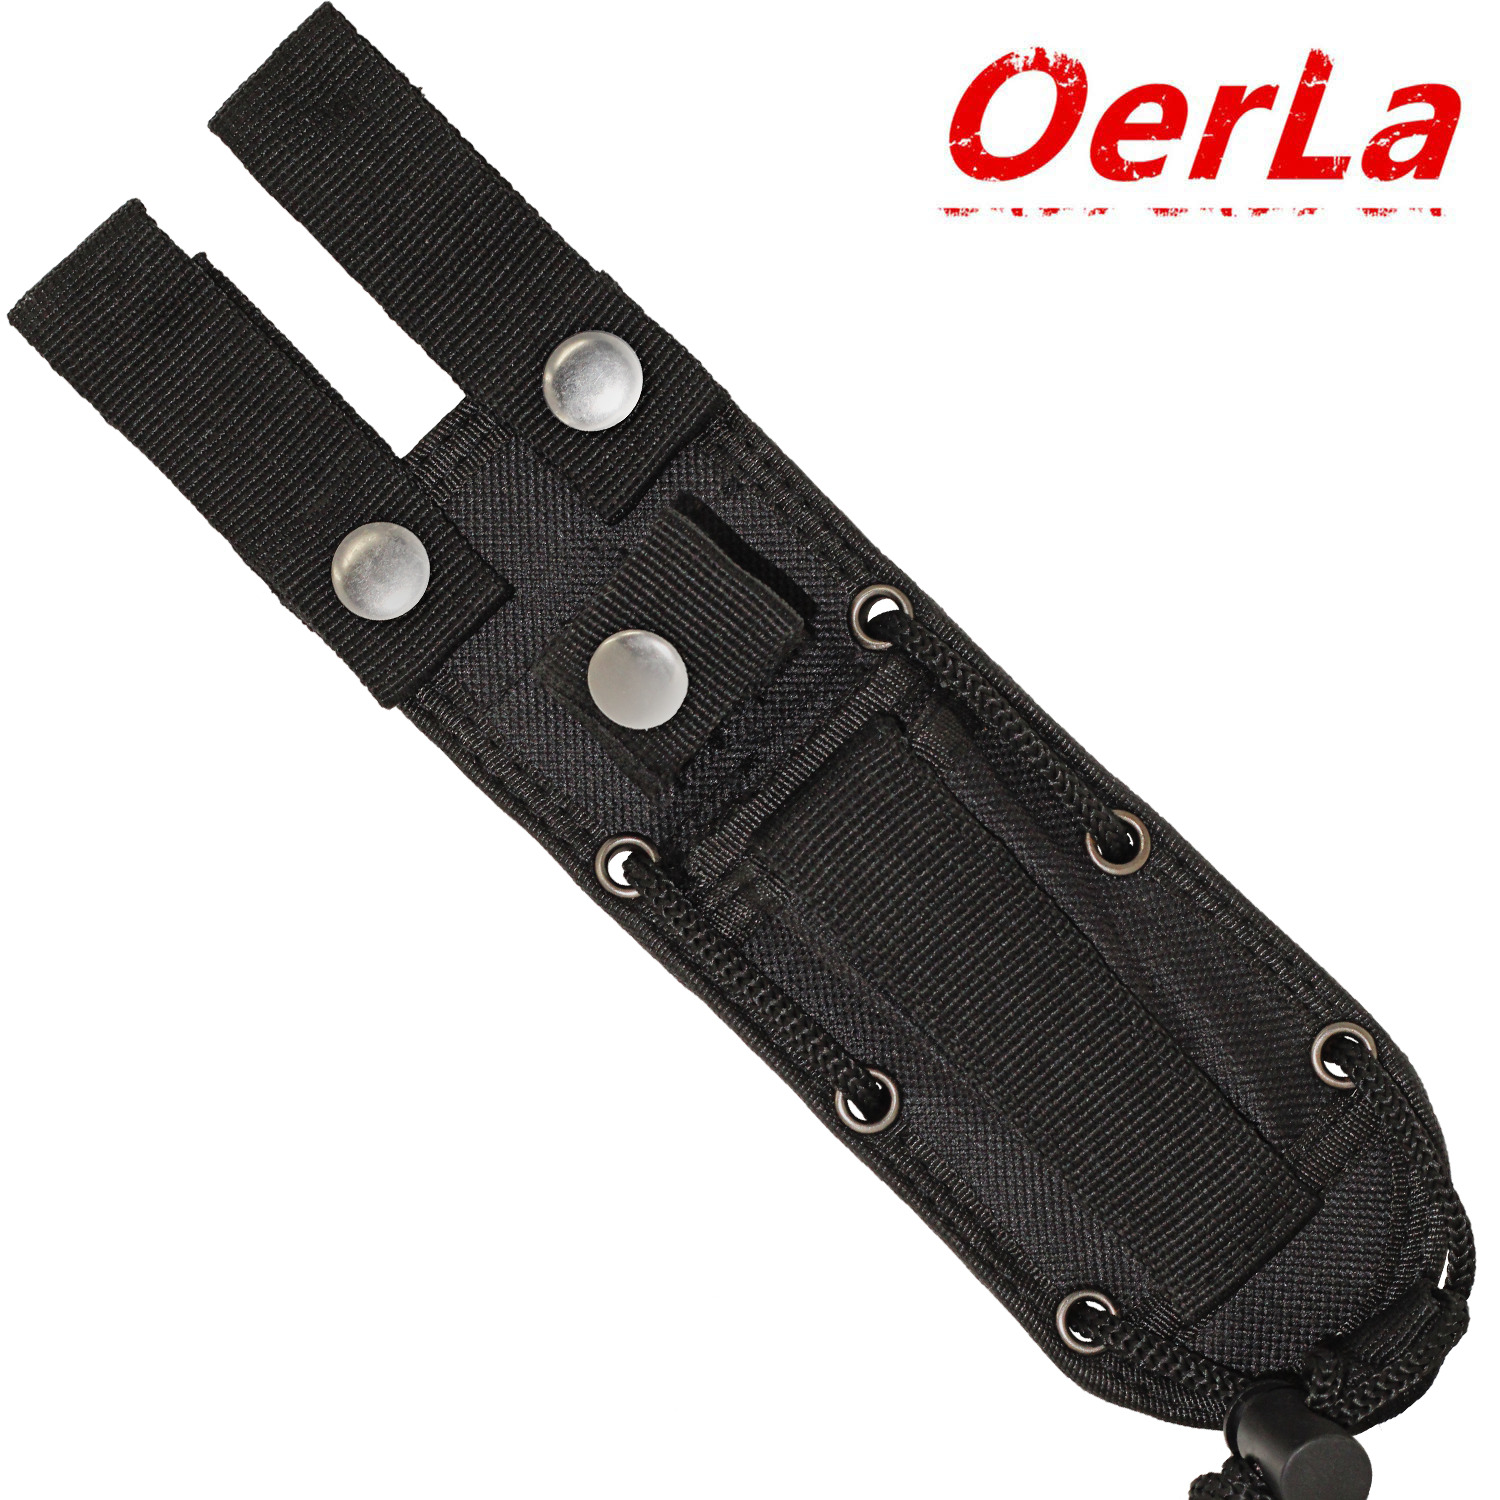 OERLA Tactical Backup Nylon Knife Sheath Compatible with OERLA Outdoor Knives